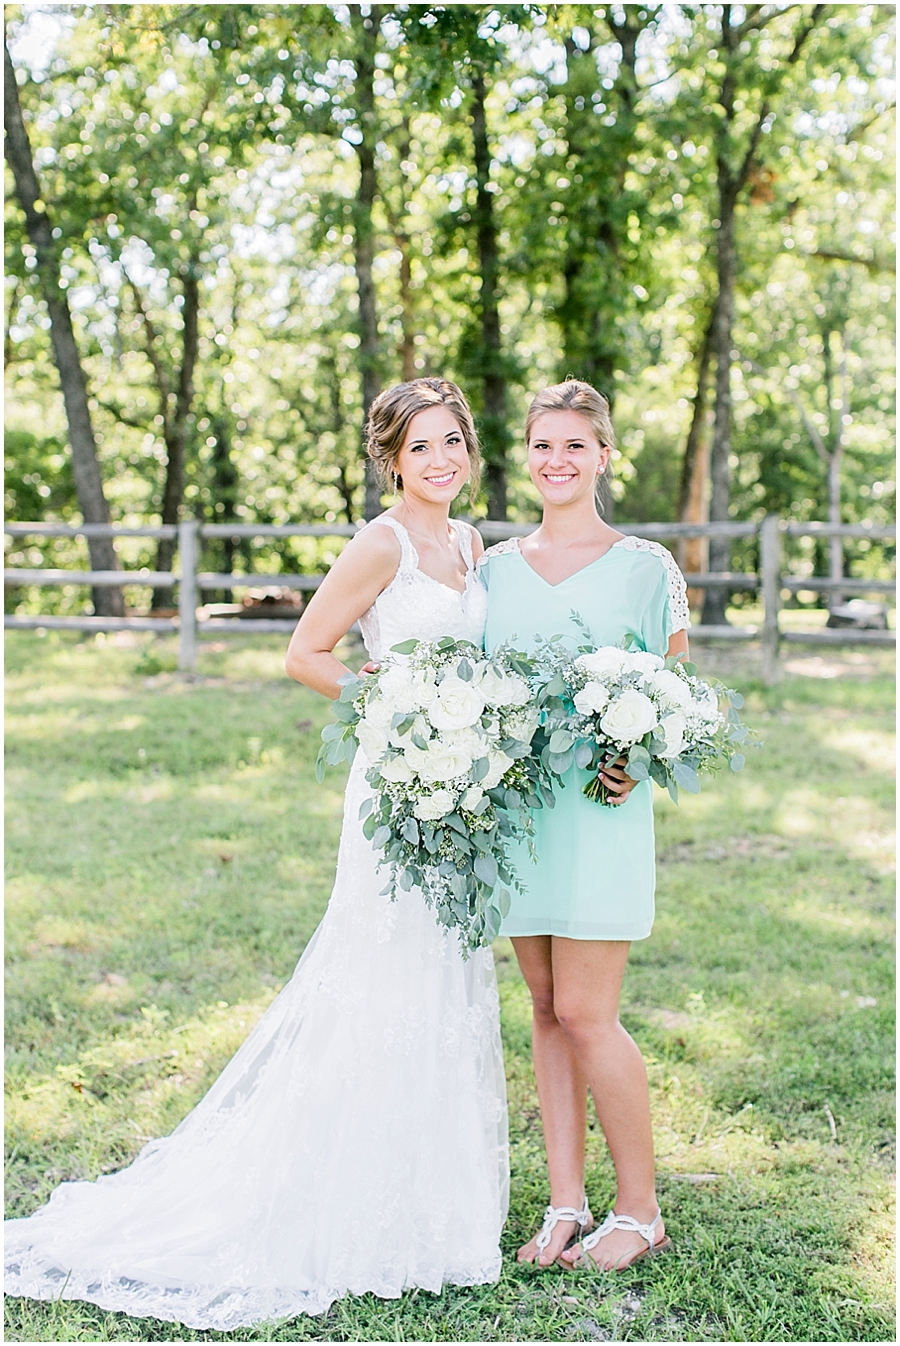 Photo Tips - How to take natural bridesmaid photos